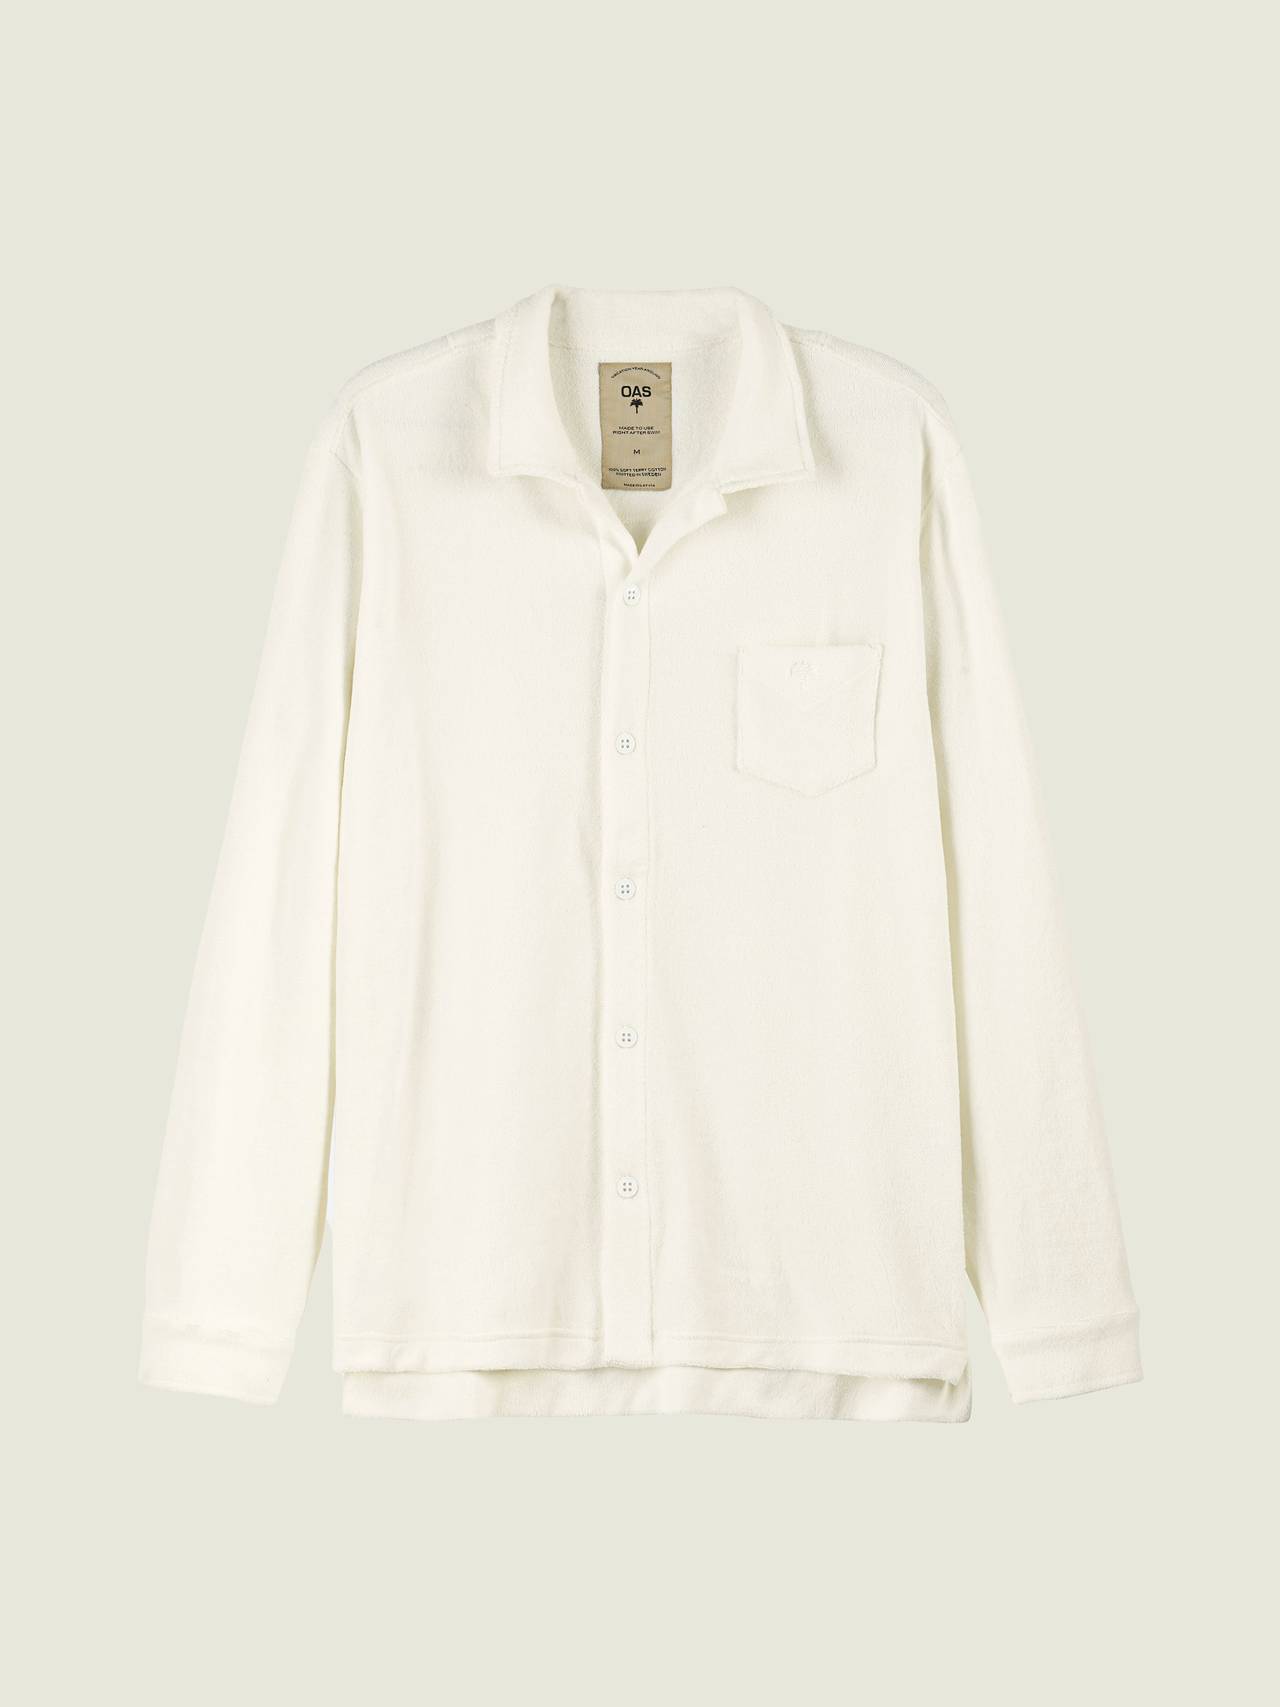 Buy OAS White Terry Camisa Shirt - Scandinavian Fashion Store